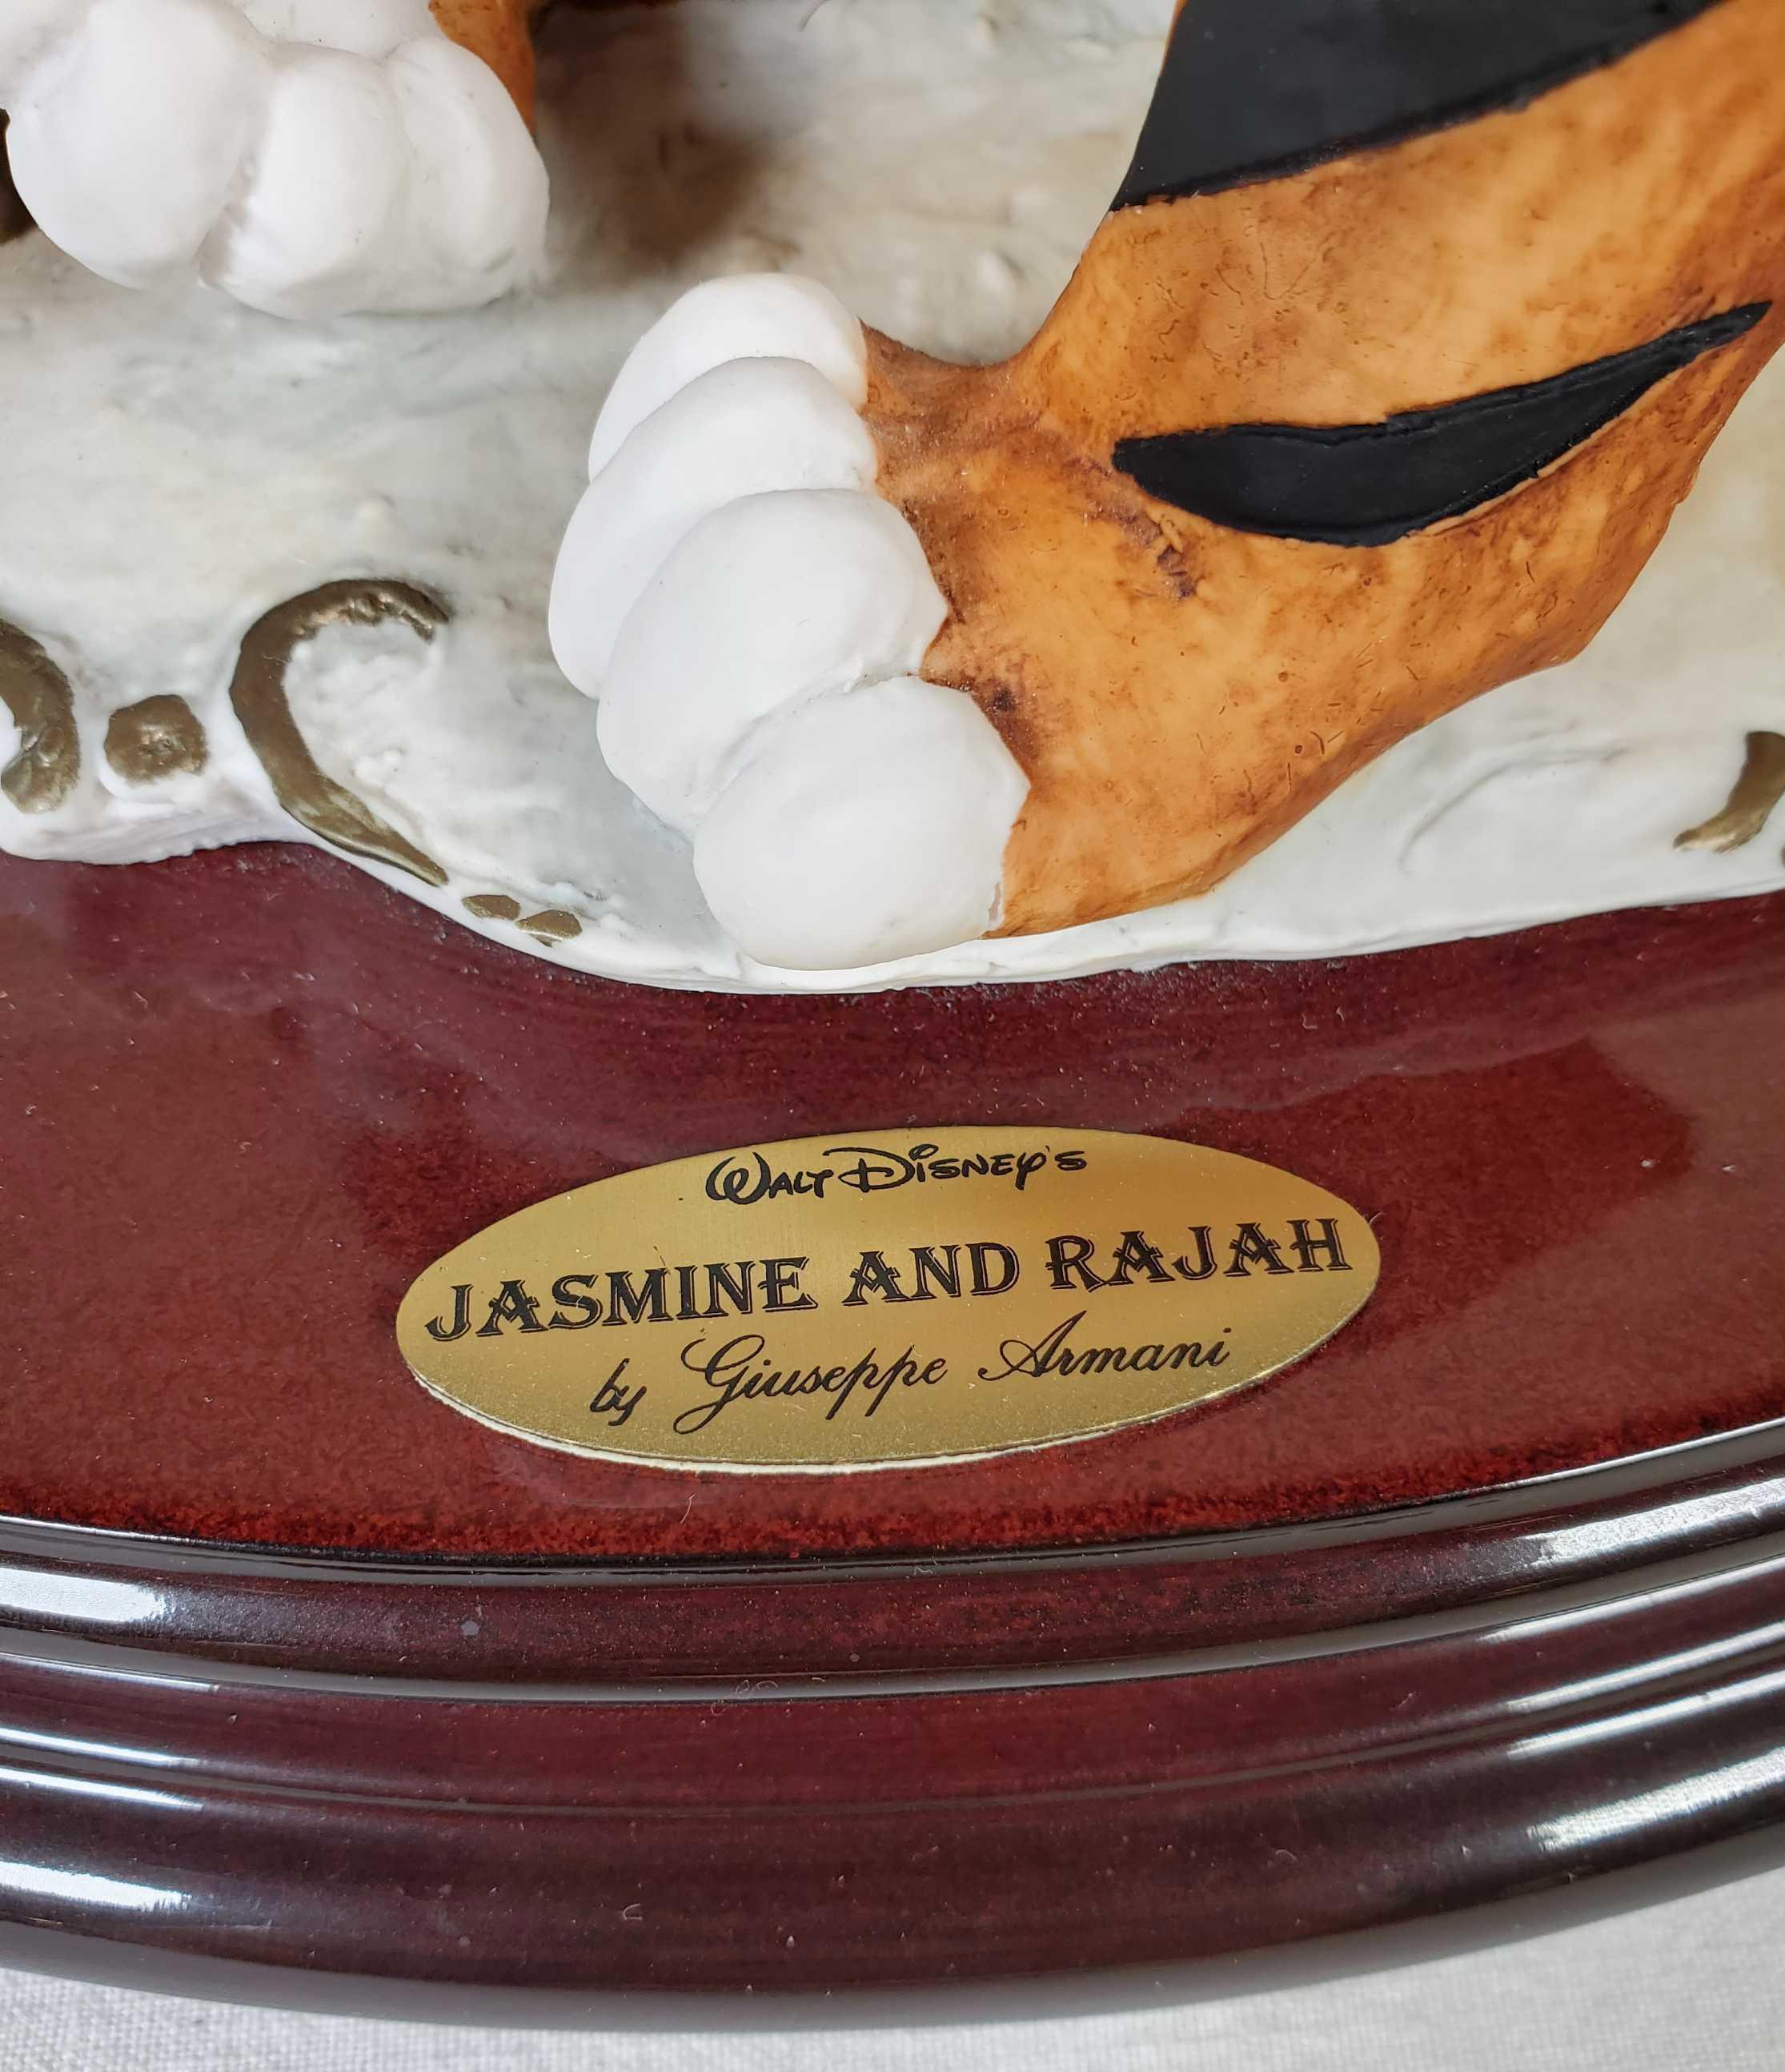 1995 Florence Limited Ed. Walt Disney's Jasmine and Rajah Figurine by Giuseppe Armani